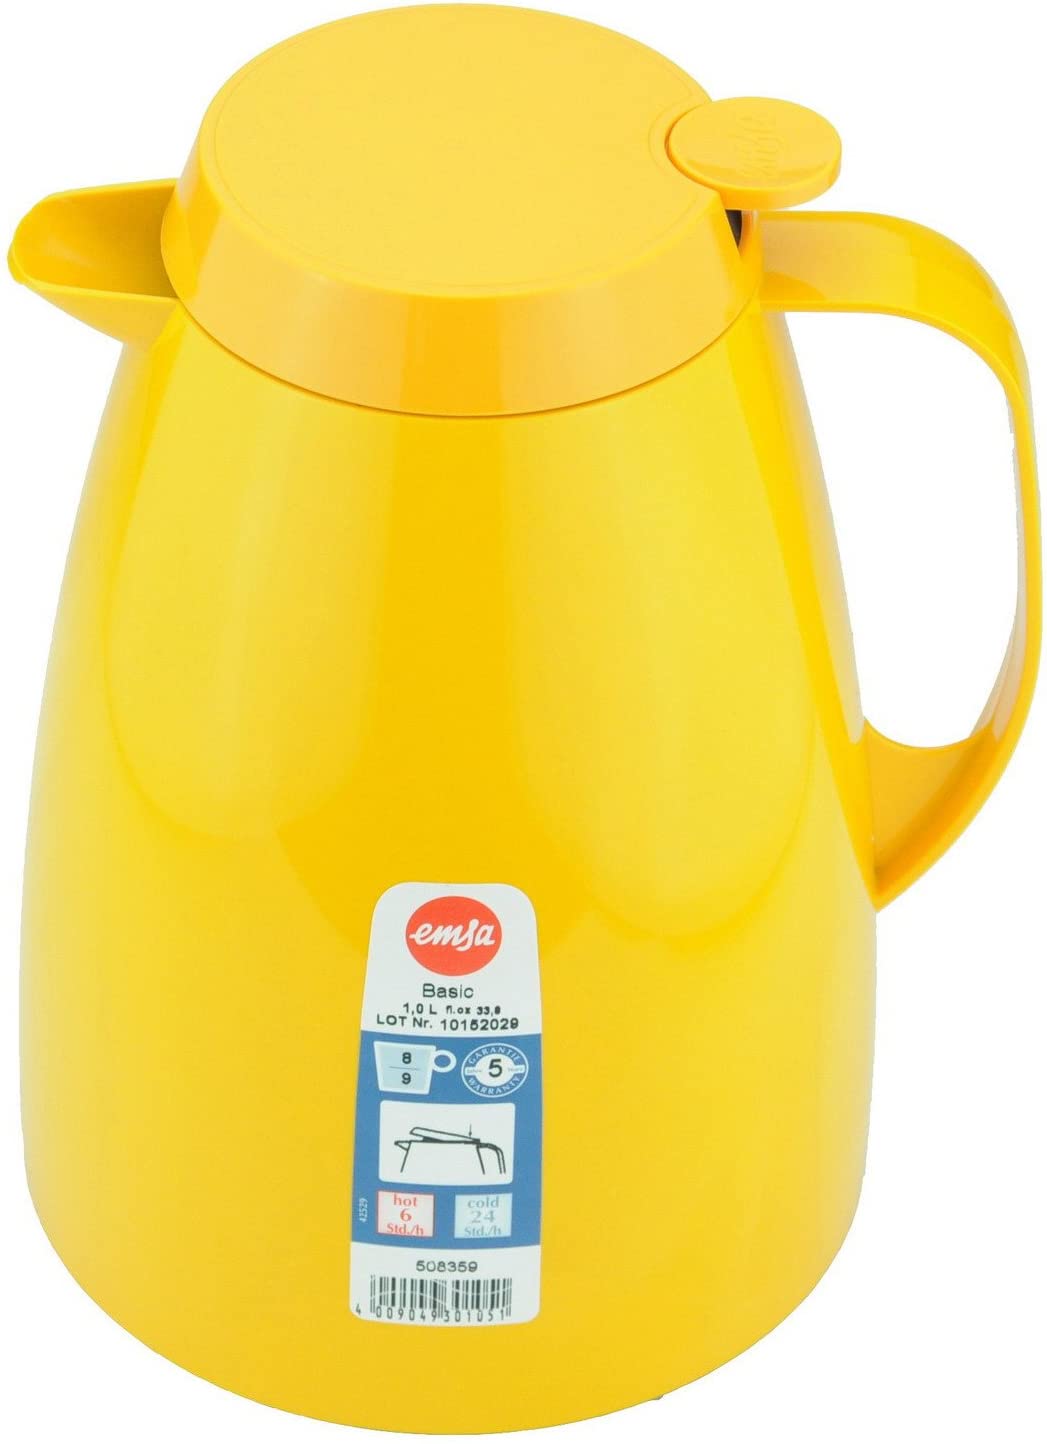 Emsa 508359 vacuum flask, thermos flask, 1l filling volume, coffee pot, quick tip closure, basic in orange